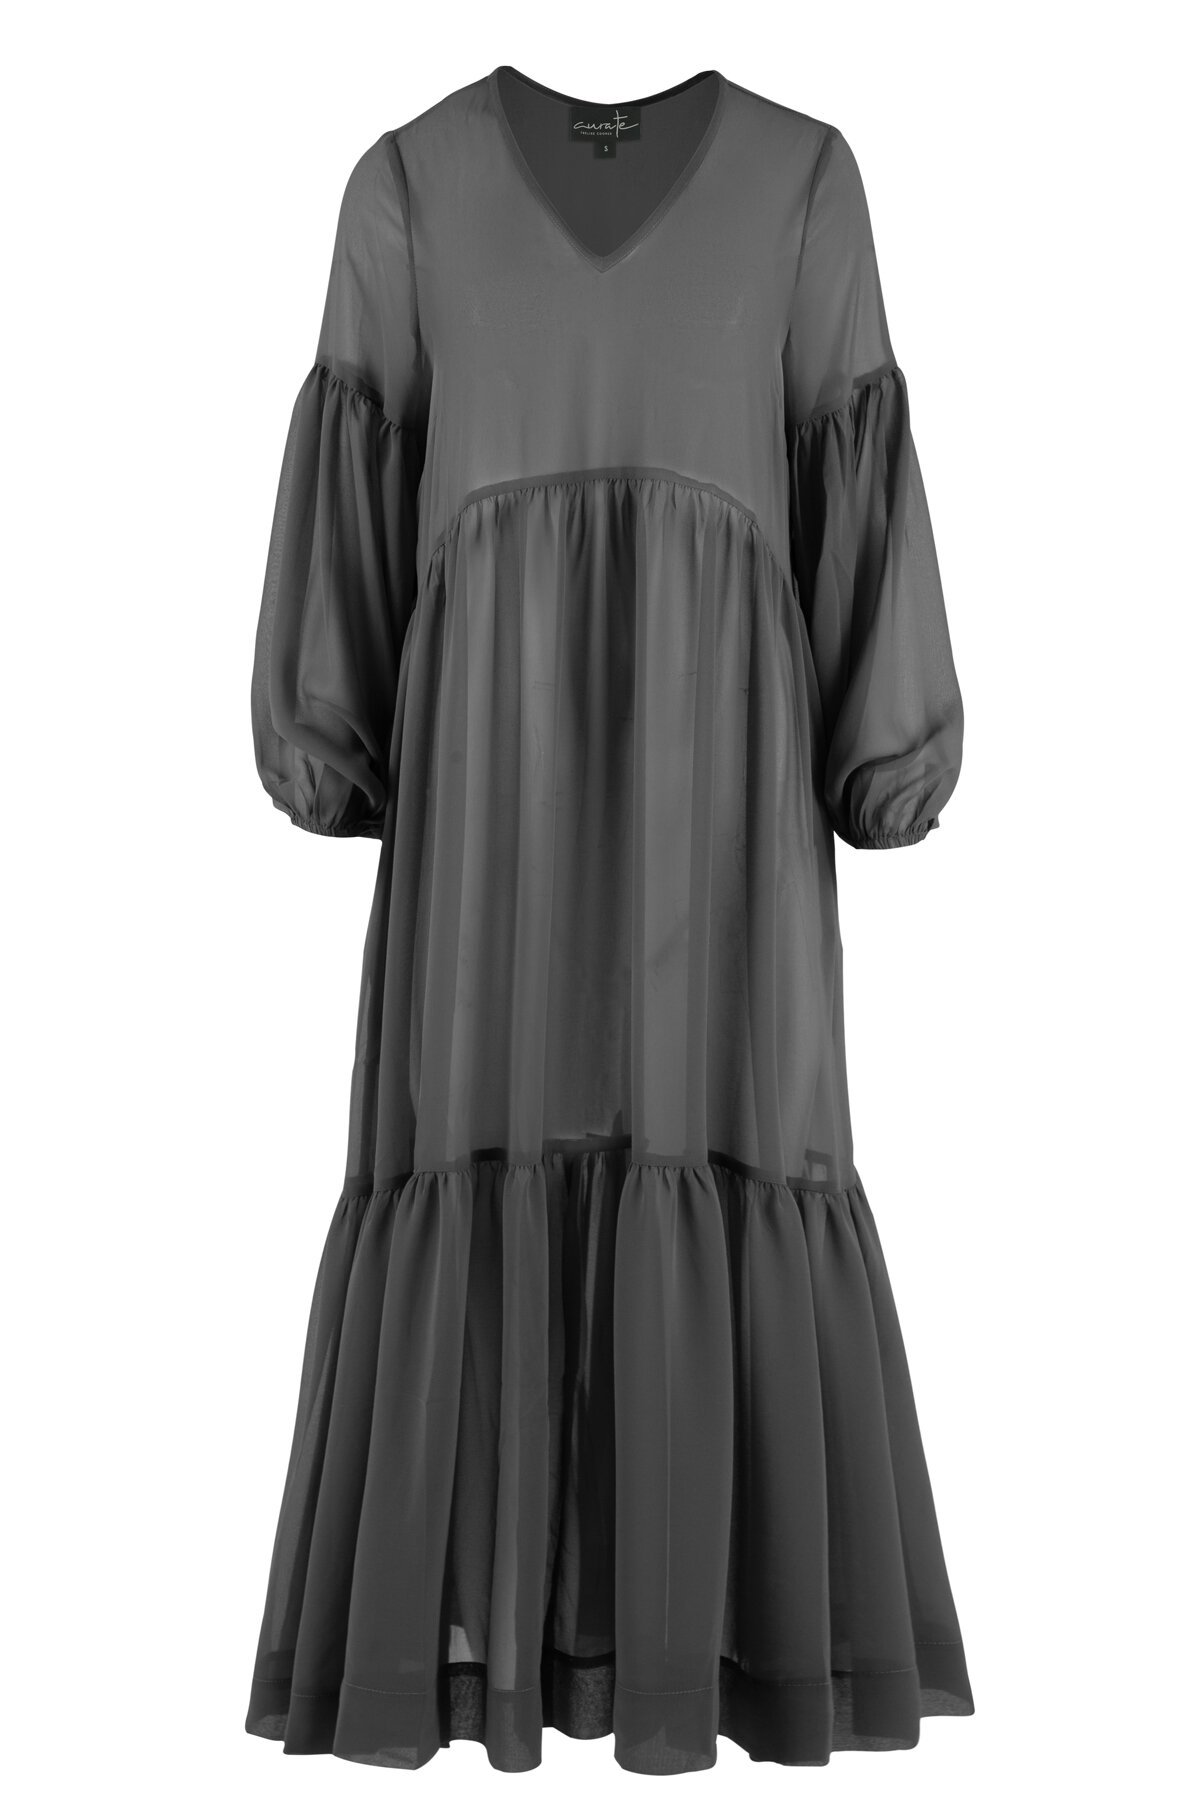 SWEPT AWAY Dress - Curate : Trelise Cooper Online - SHEER BRILLIANCE ...